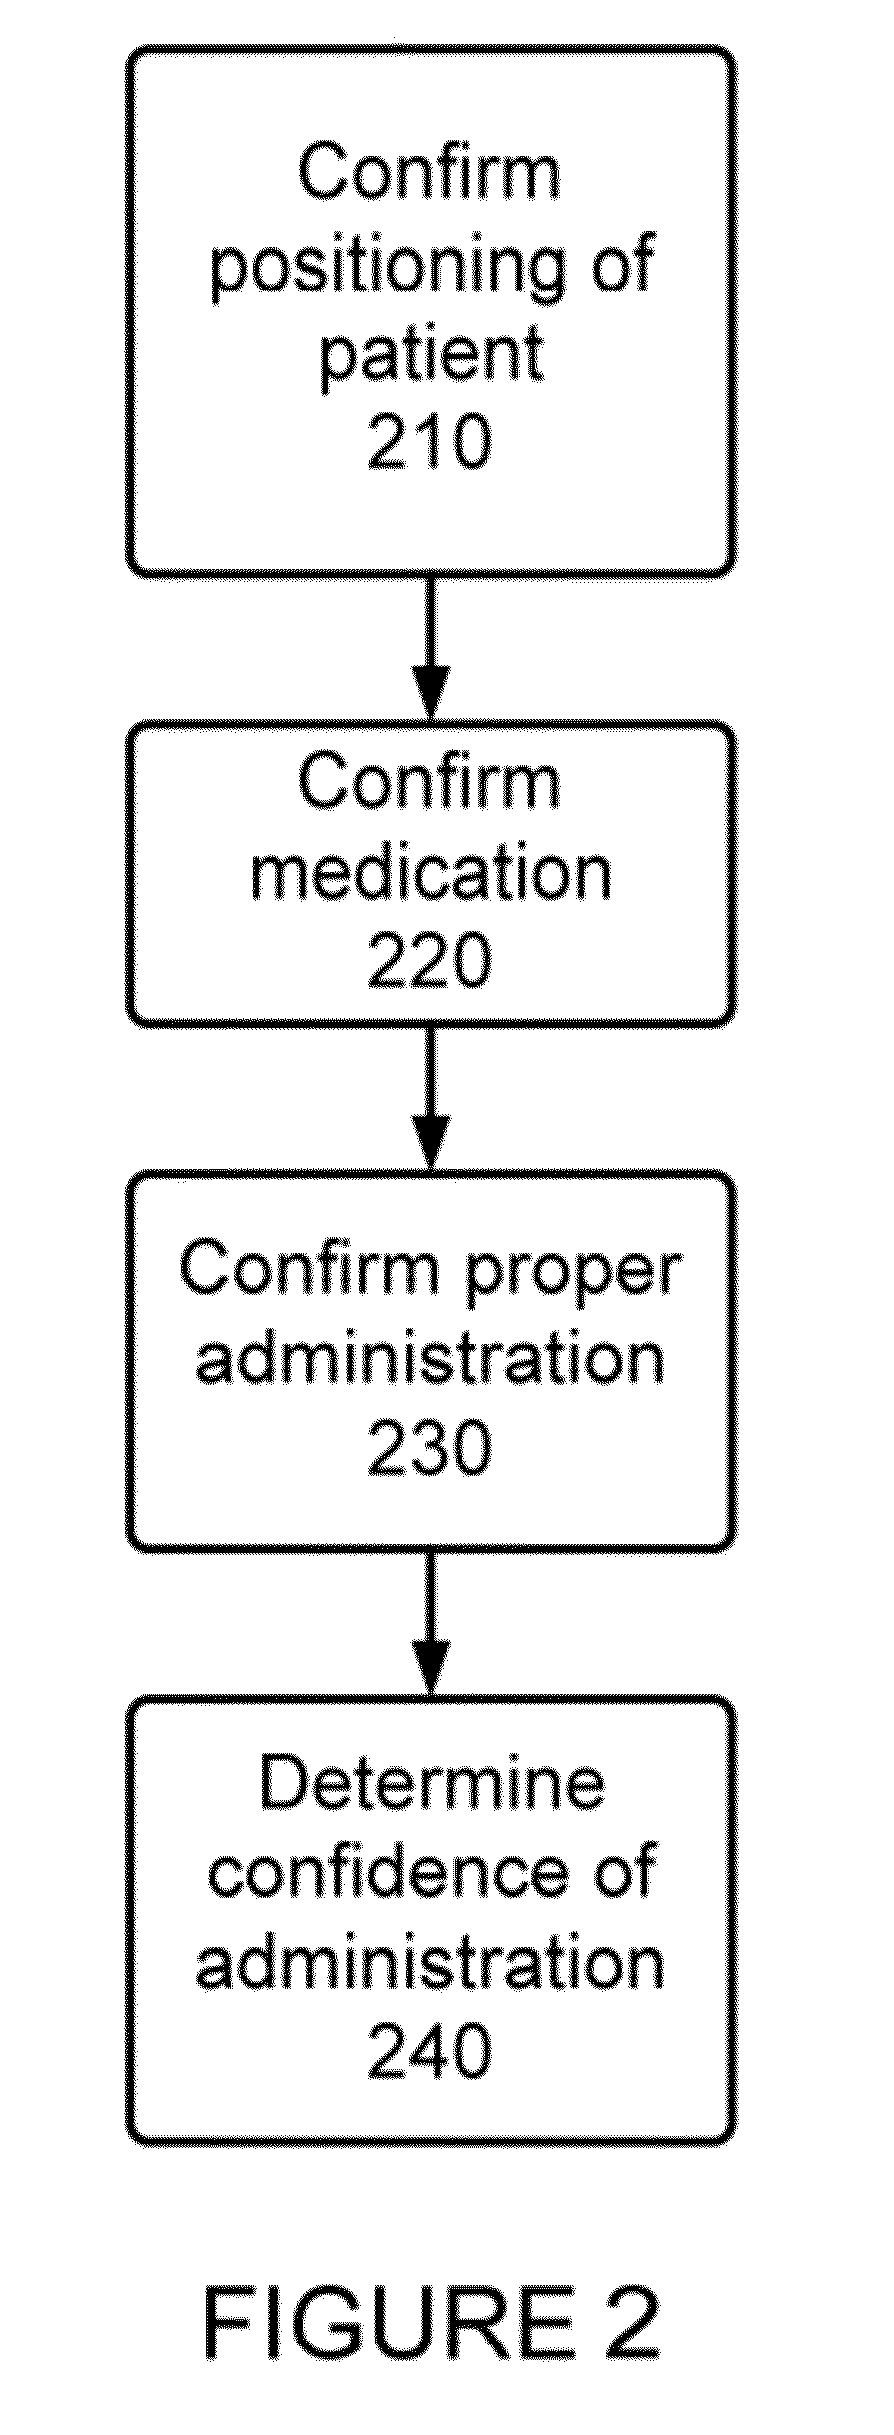 Method and Apparatus for Monitoring Medication Adherence